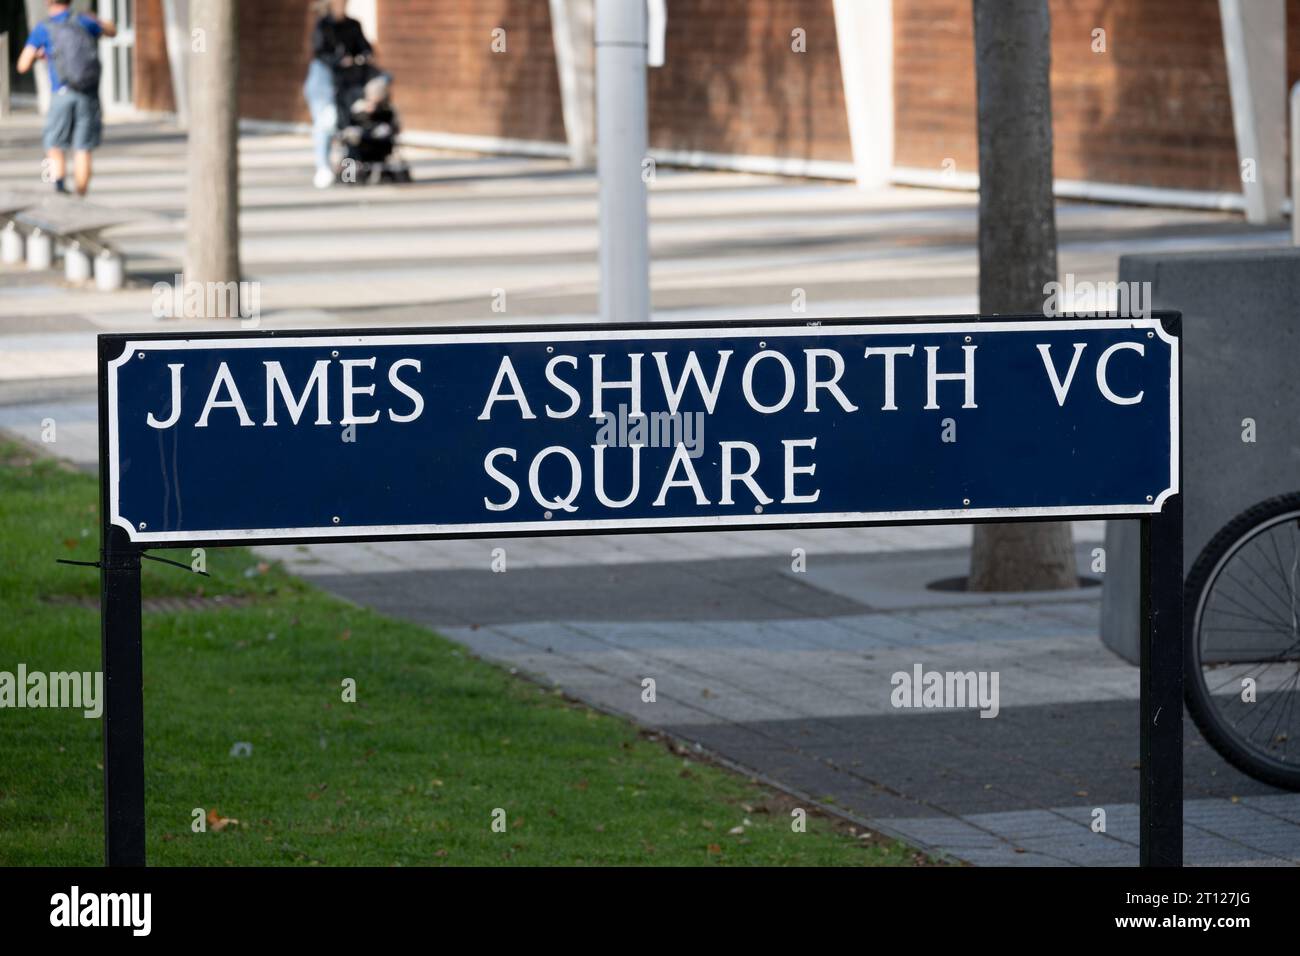 James Ashworth VC Square Schild, Corby, Northamptonshire, England, Großbritannien Stockfoto